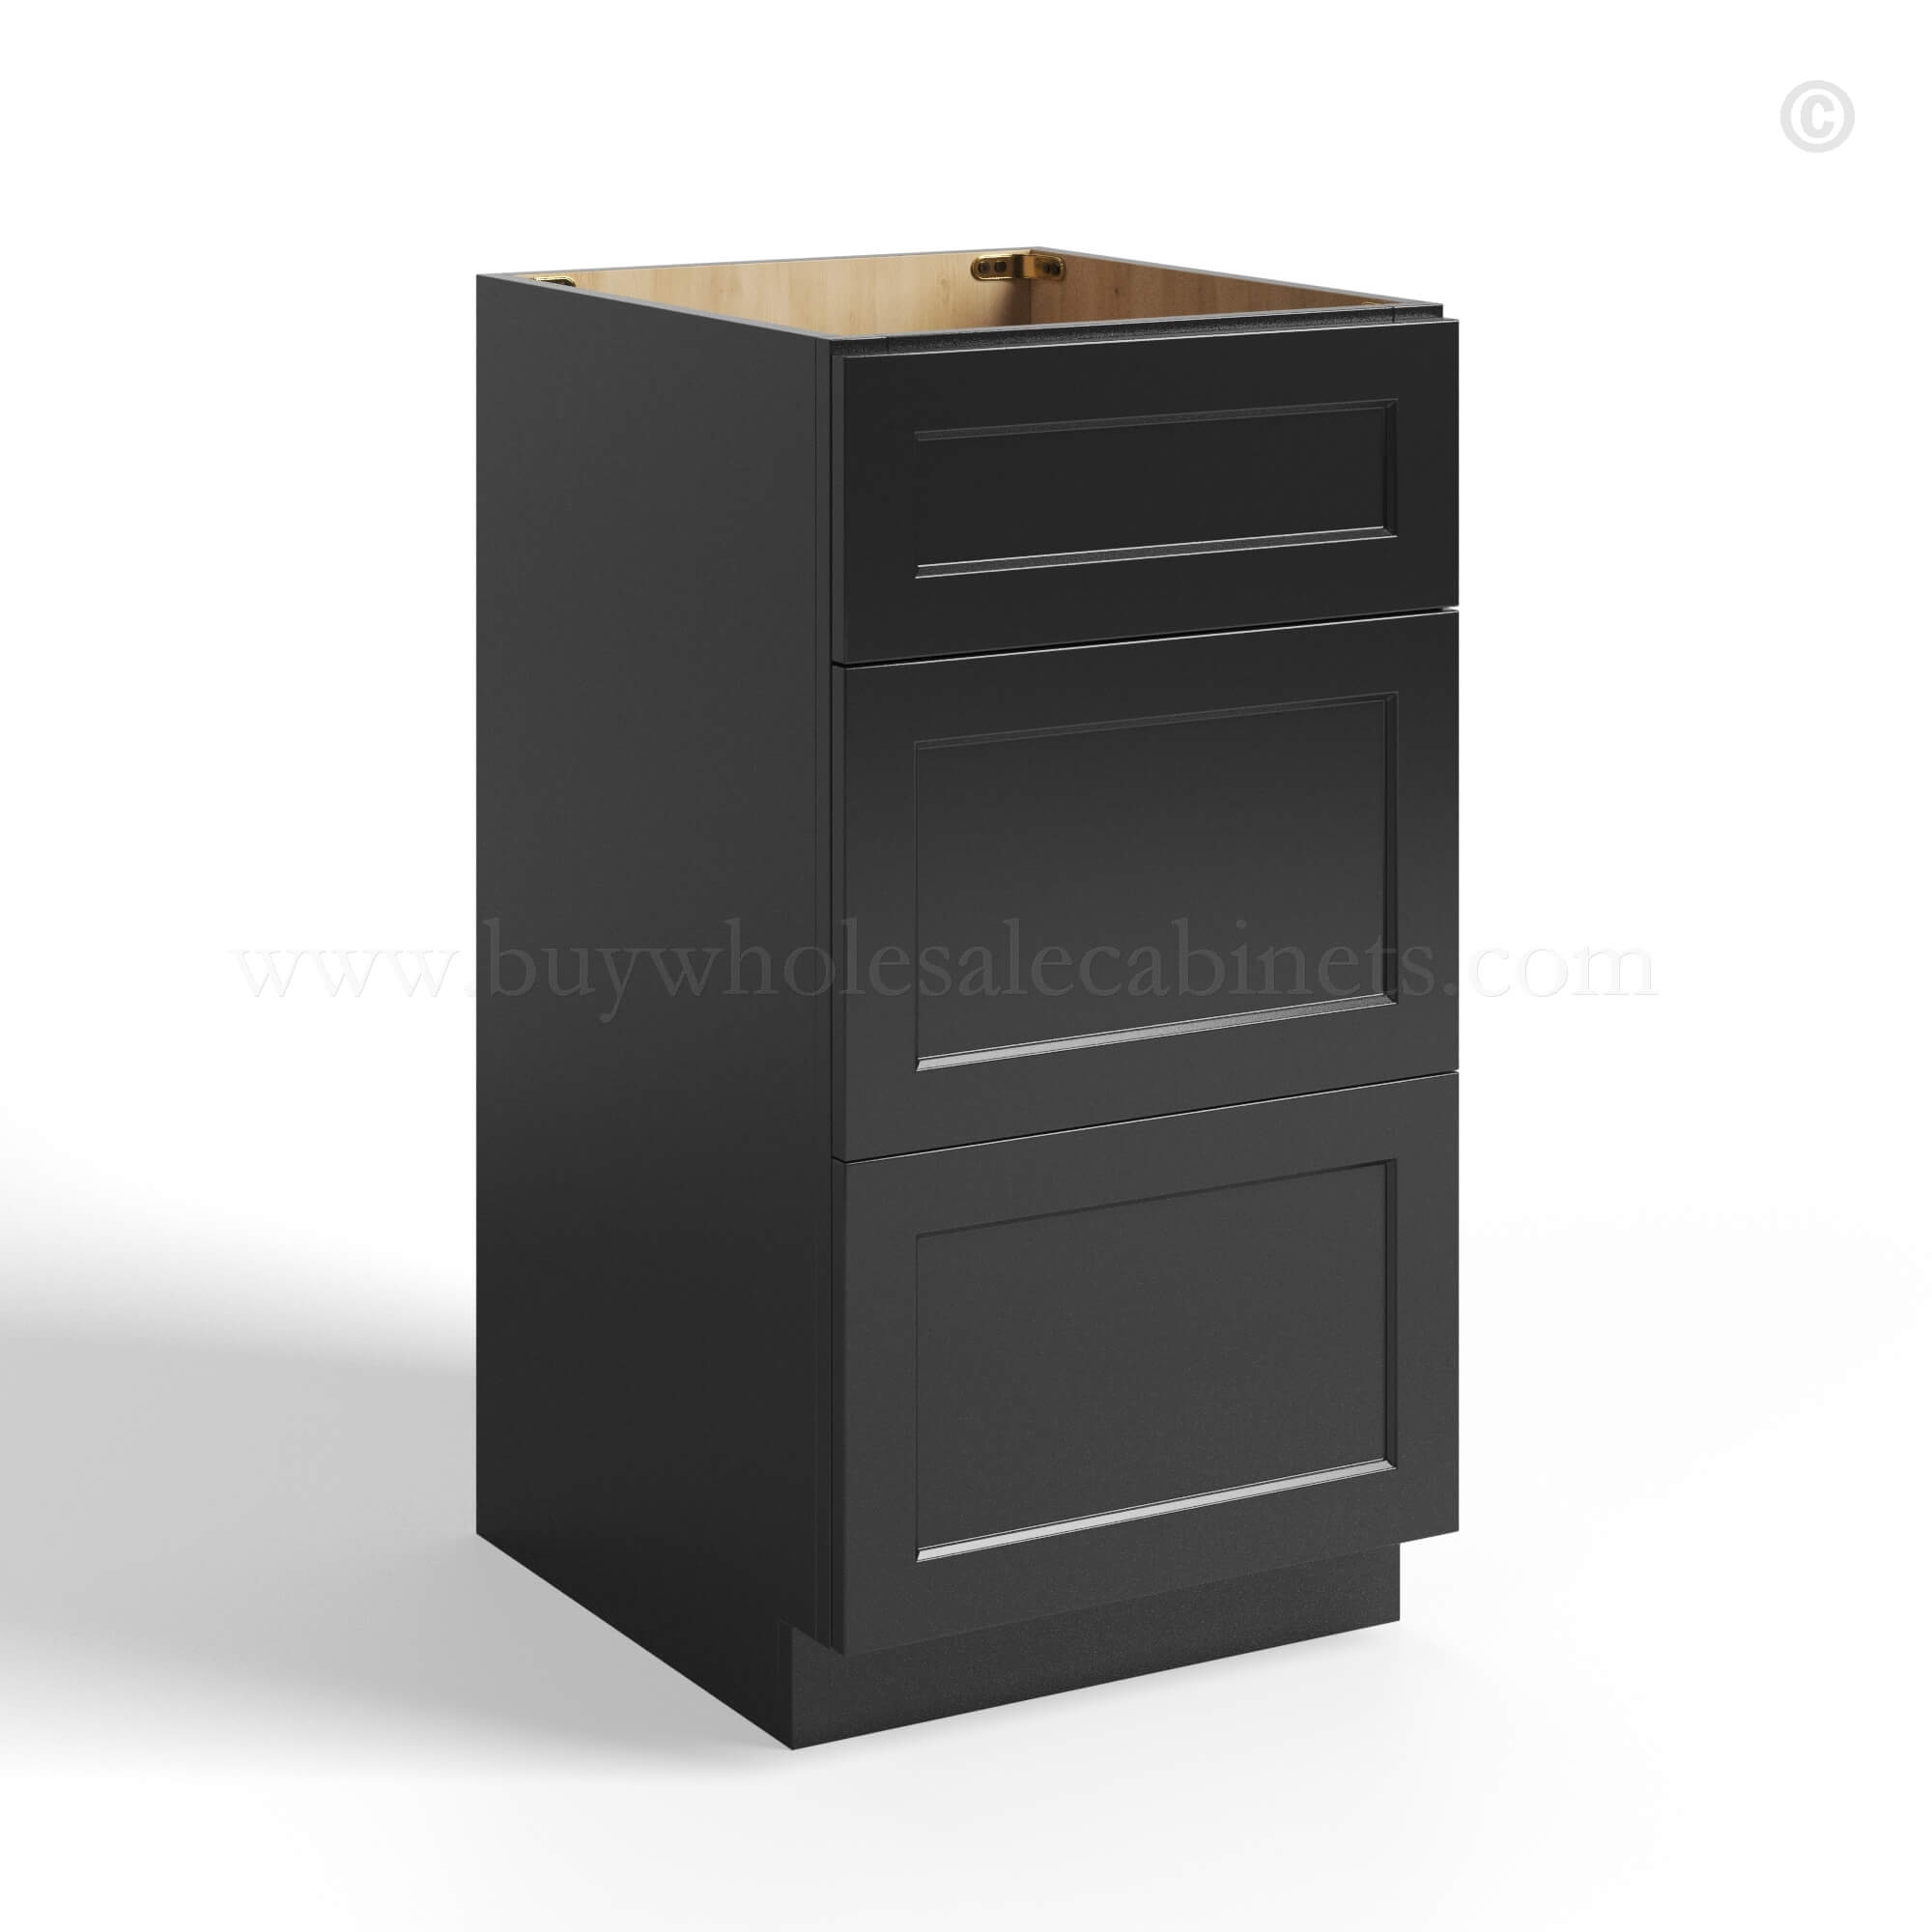 Black Shaker Vanity Drawer Base Cabinet, rta cabinets, wholesale cabinets